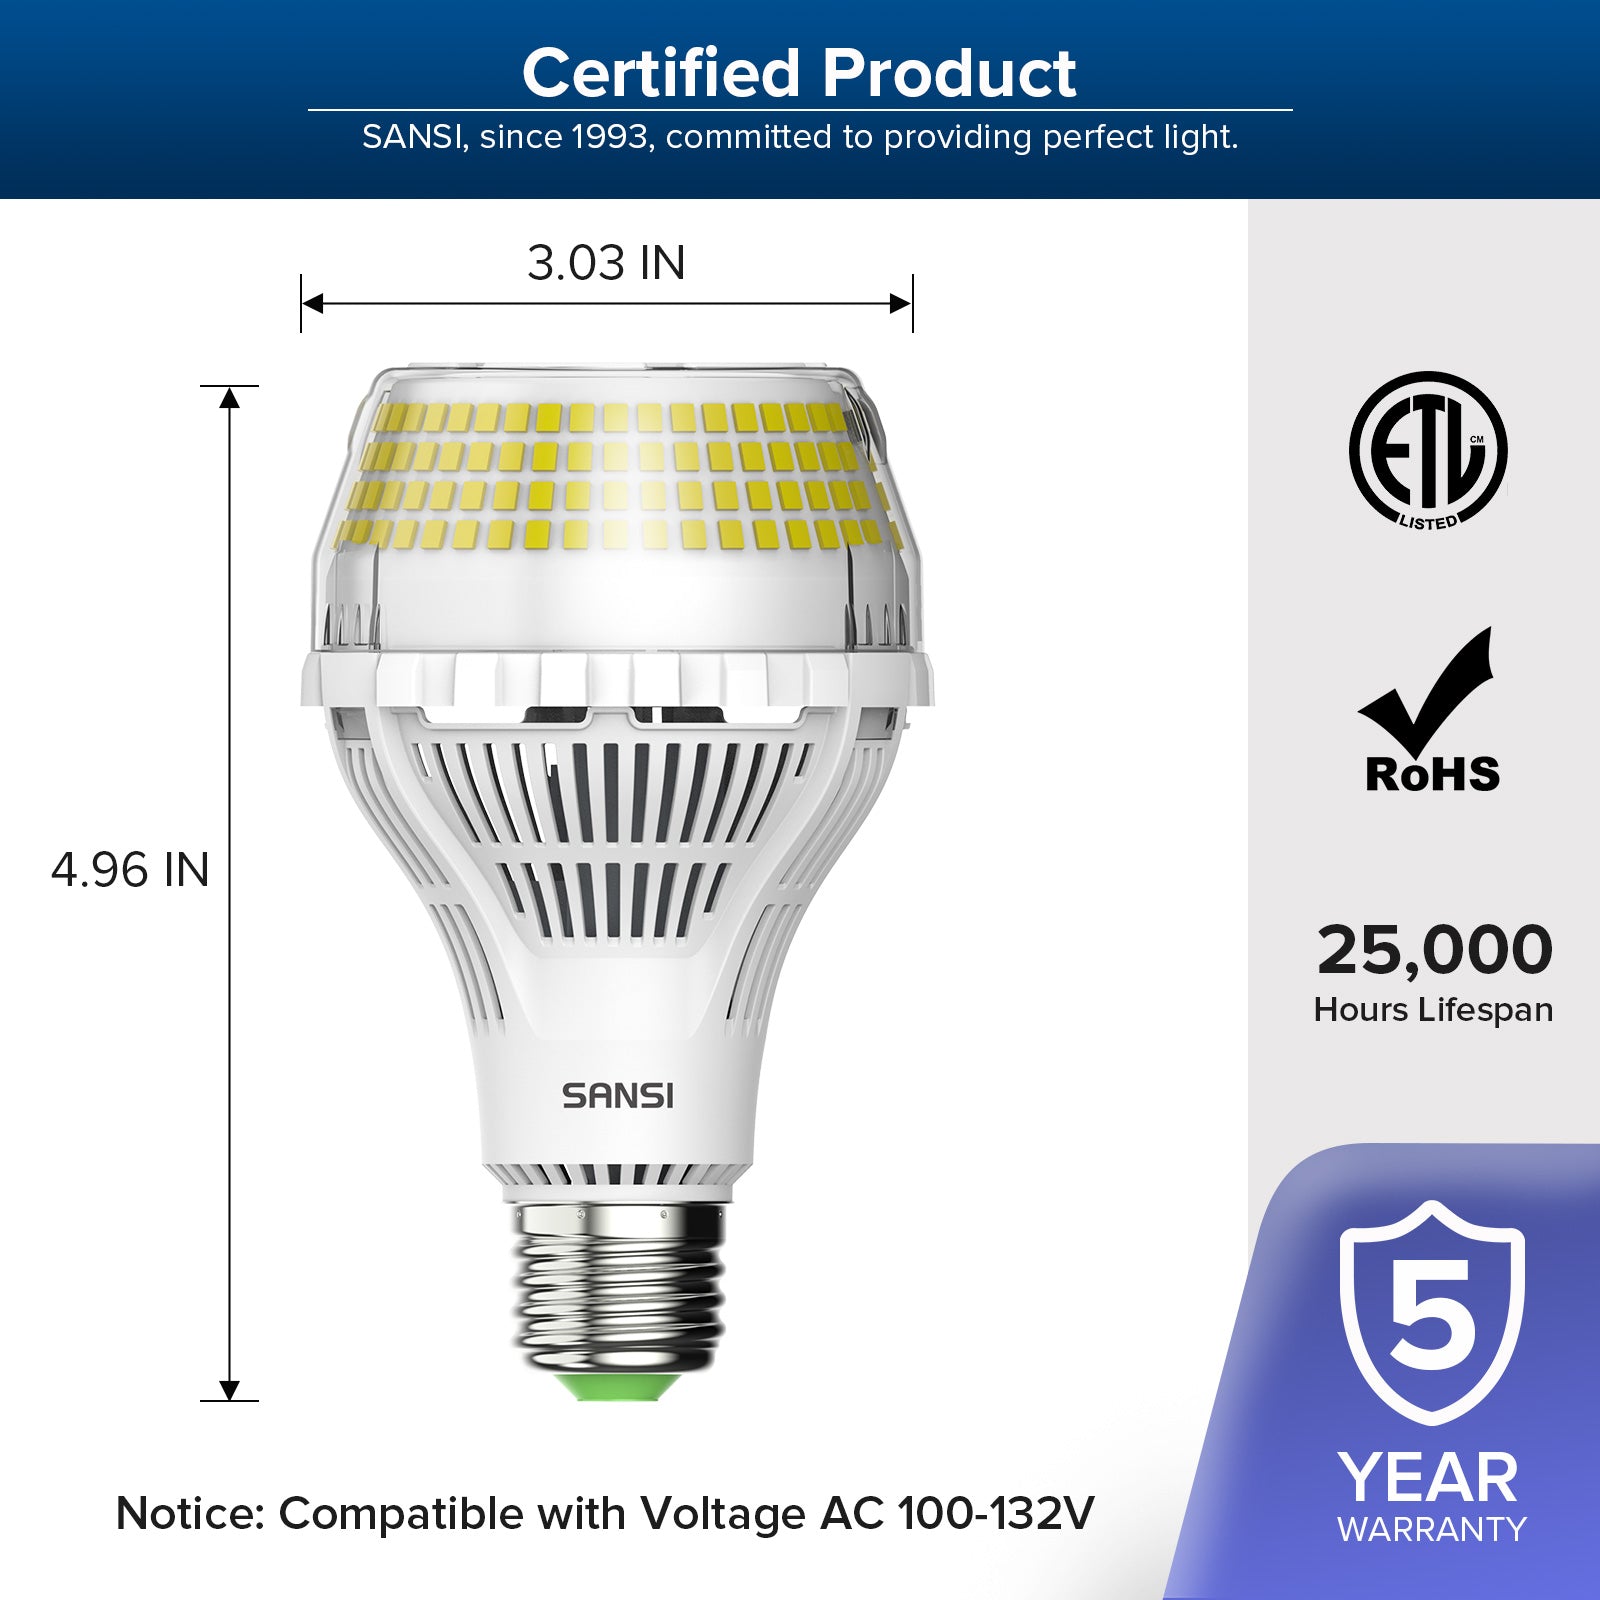 A21 40W LED 5000K Light Bulb (US ONLY)